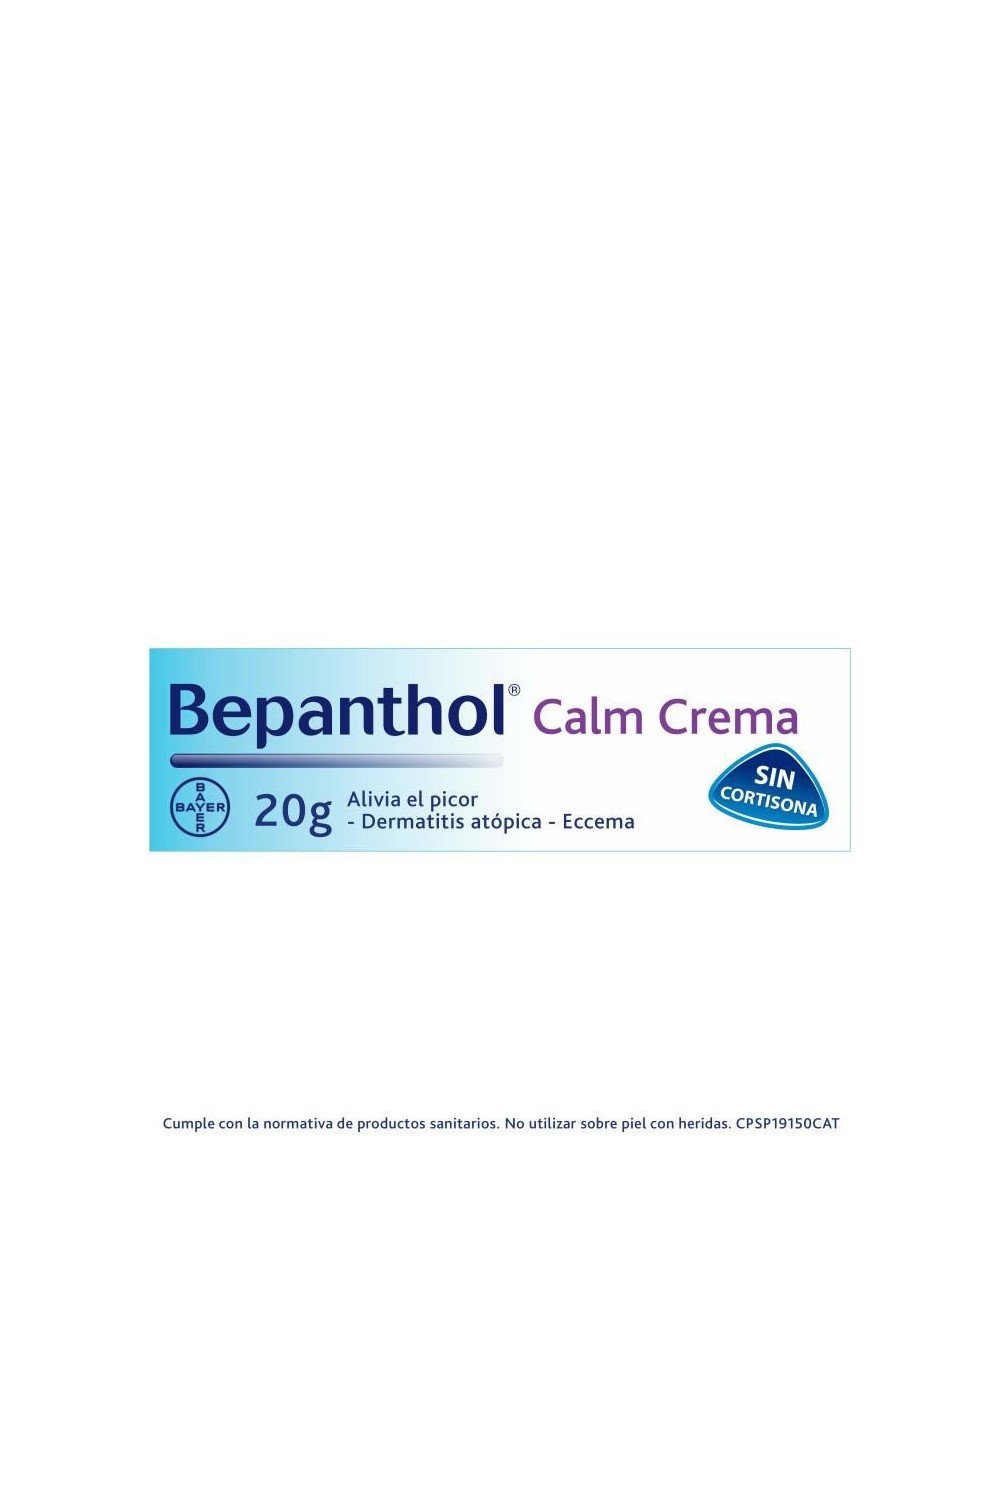 Bepanthol® Calm Cream 20g